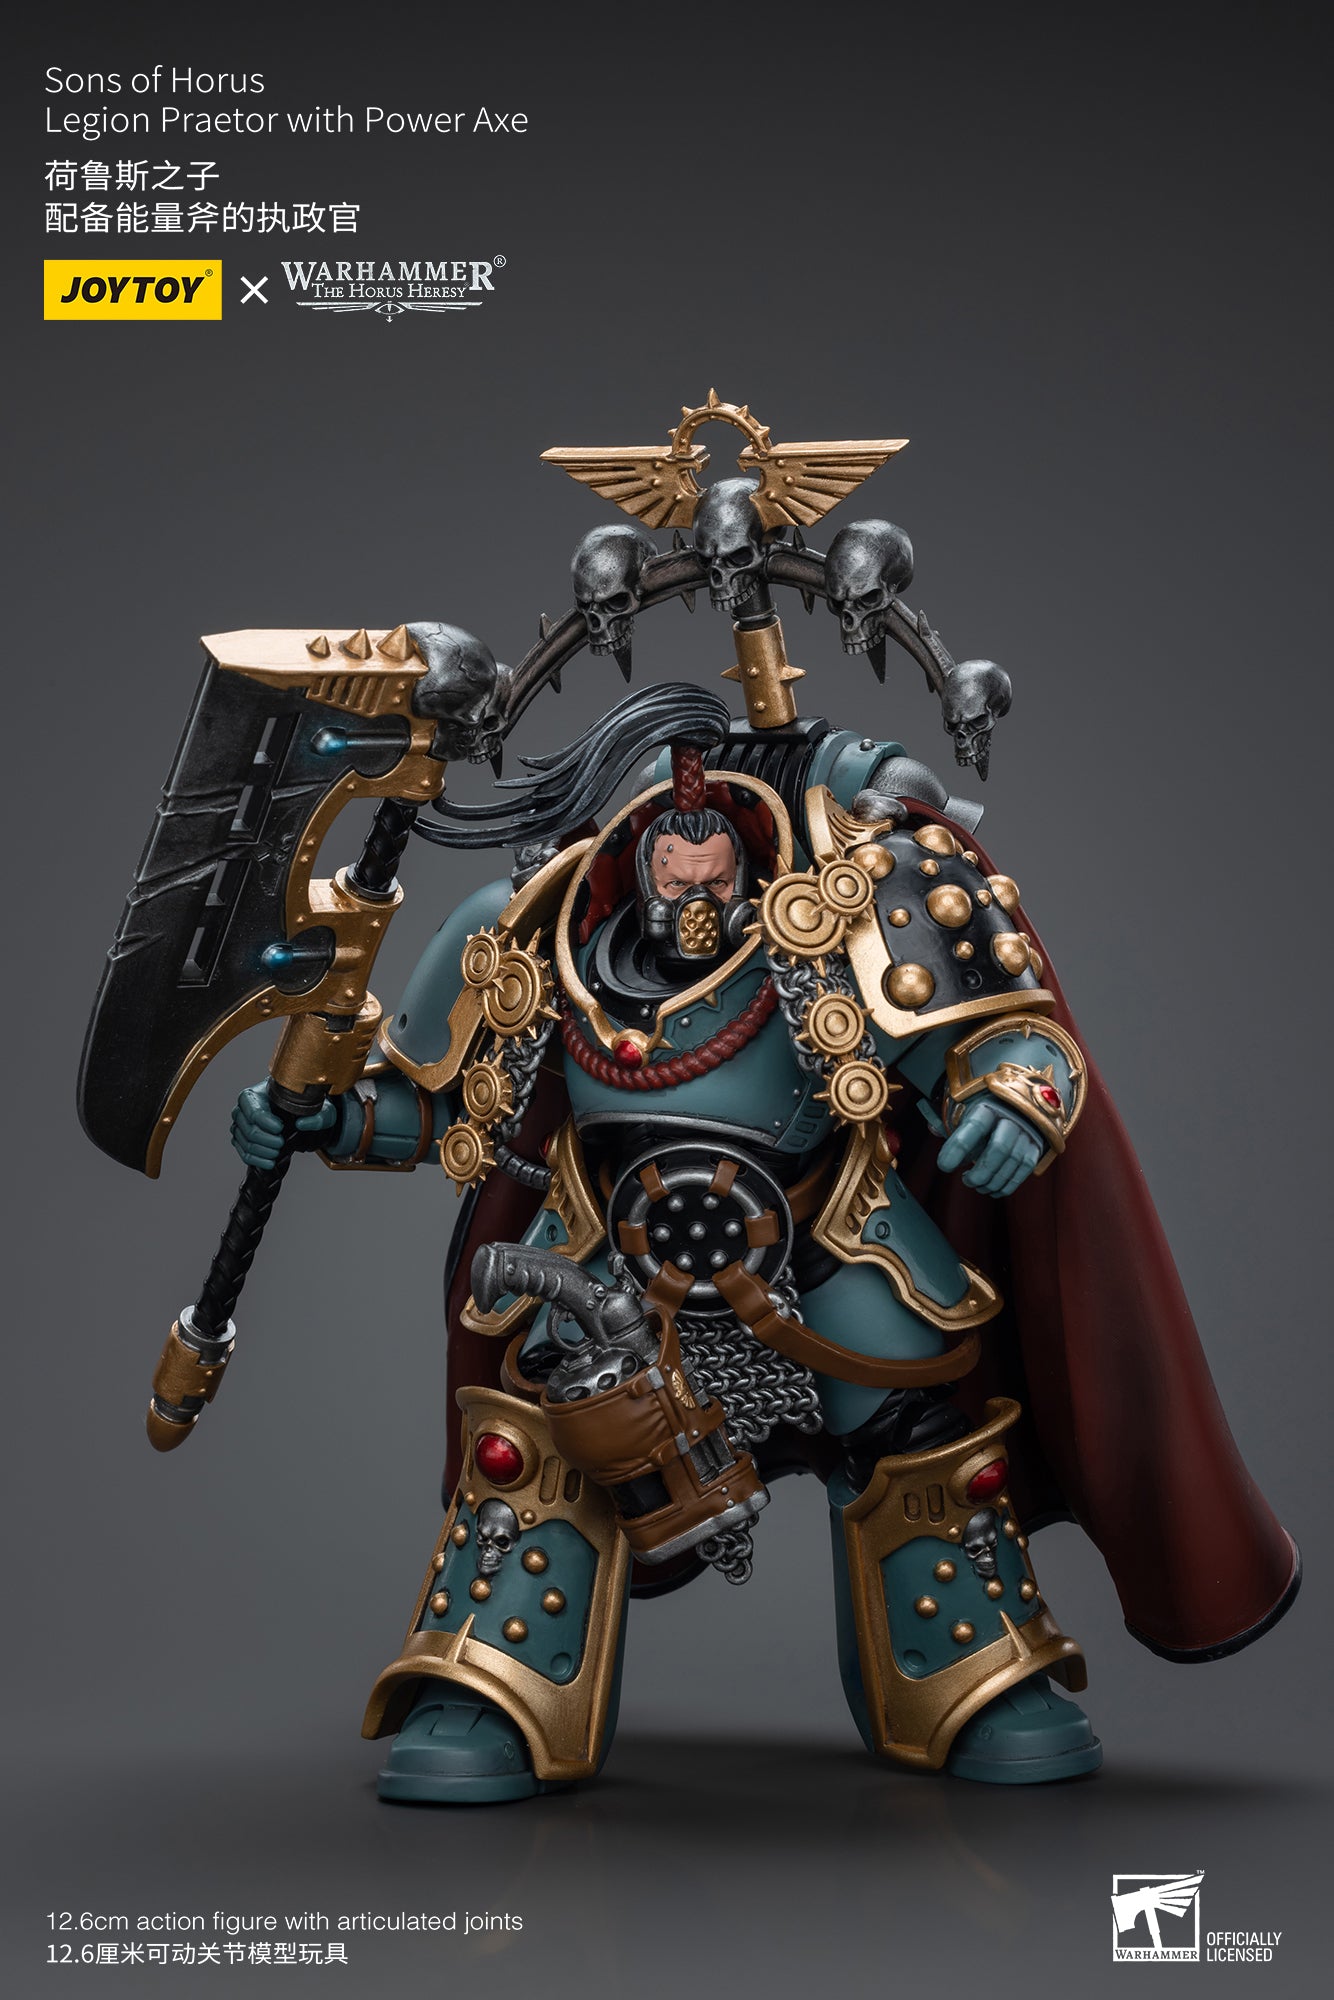 Sons of Horus Legion Praetor with Power Axe - Warhammer 40K Action Figure By JOYTOY